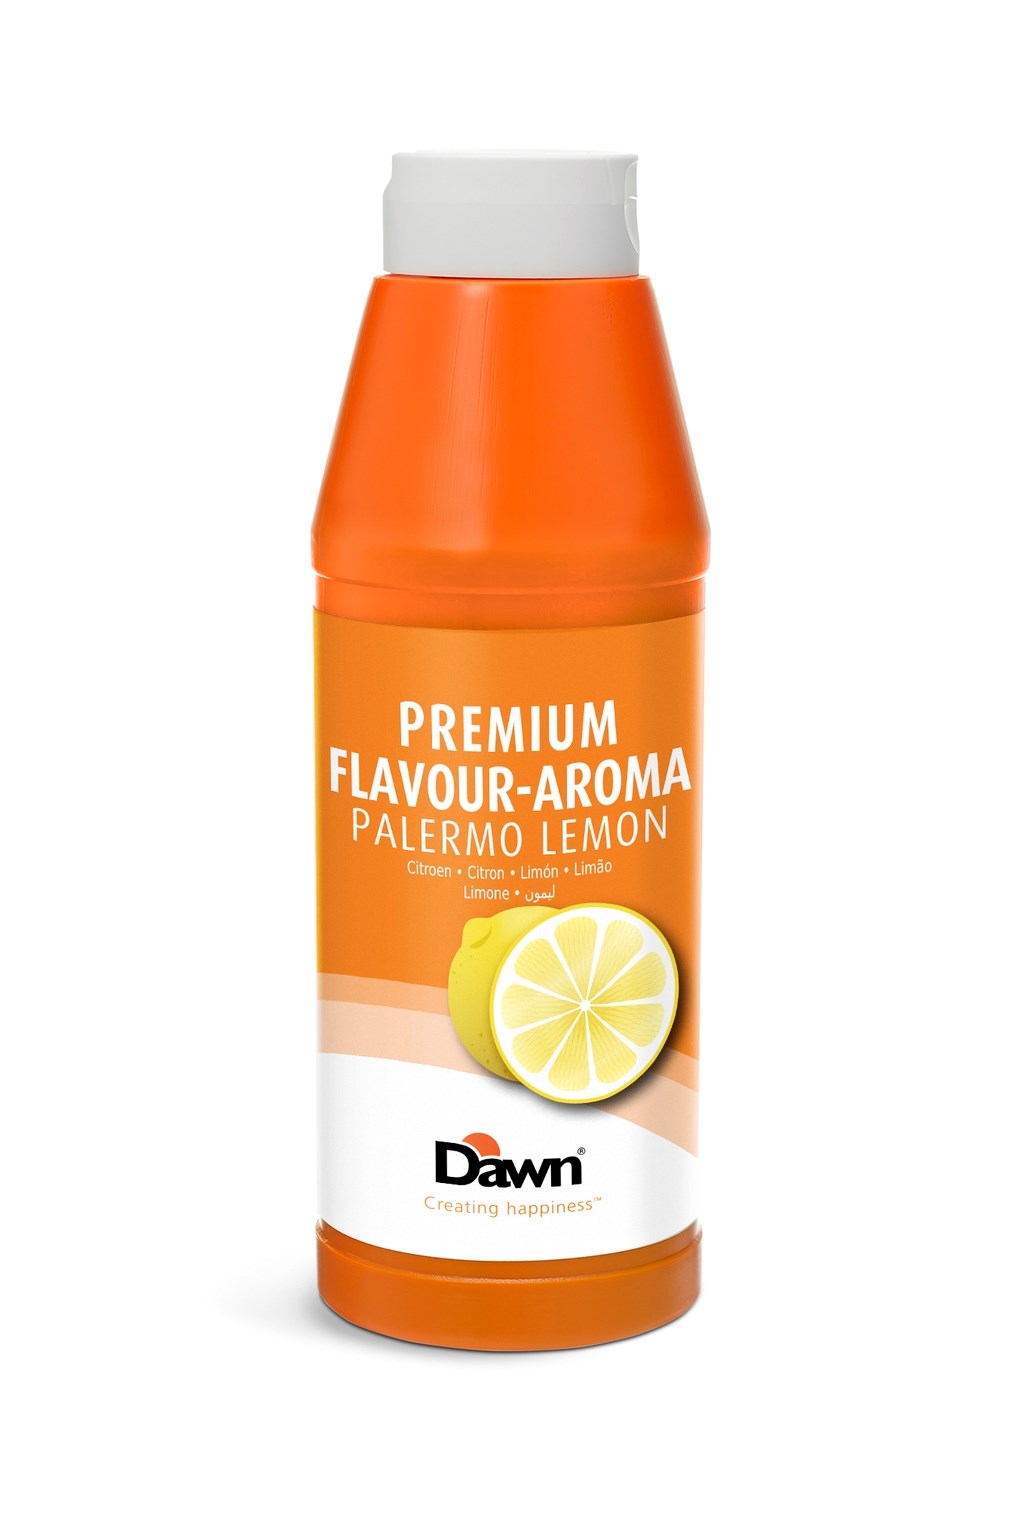 Dawn Palermo Natural Lemon Flavouring Aroma 1 kg